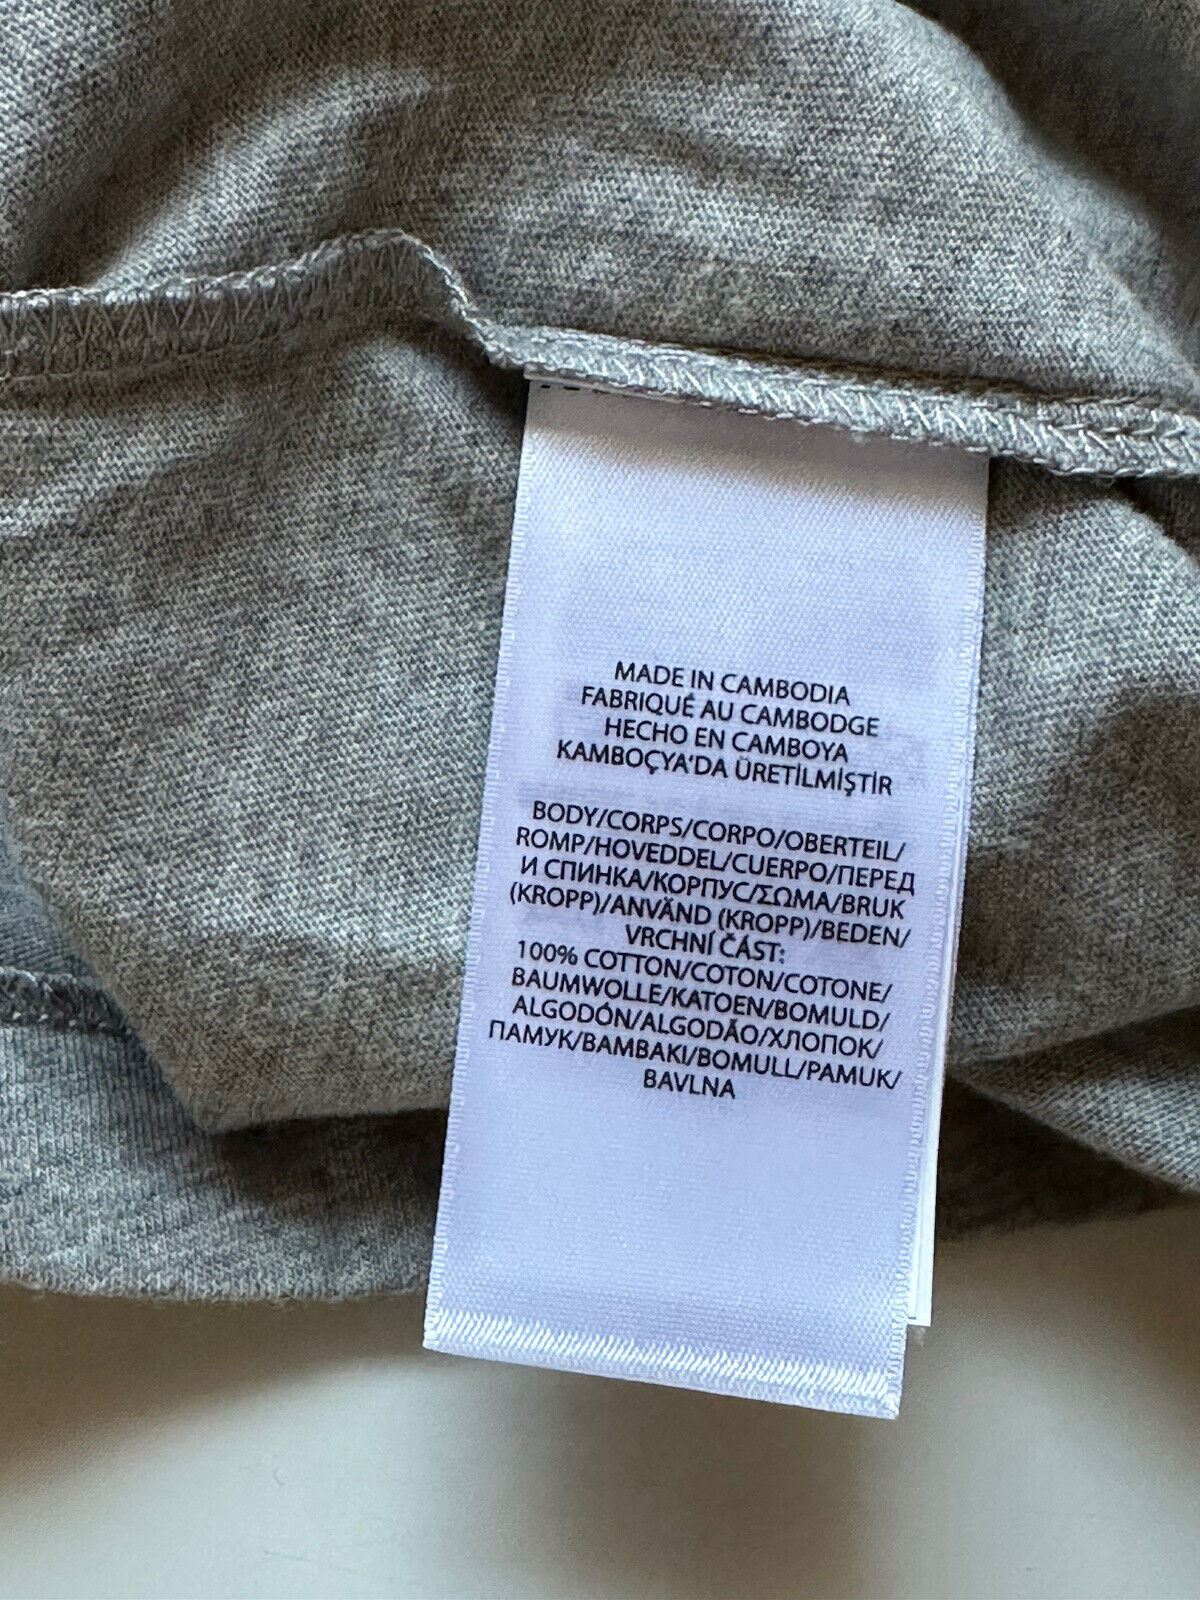 Neu mit Etikett: 69,50 $ Polo Ralph Lauren Kurzarm-T-Shirt mit Bärenmuster, Grau, XL